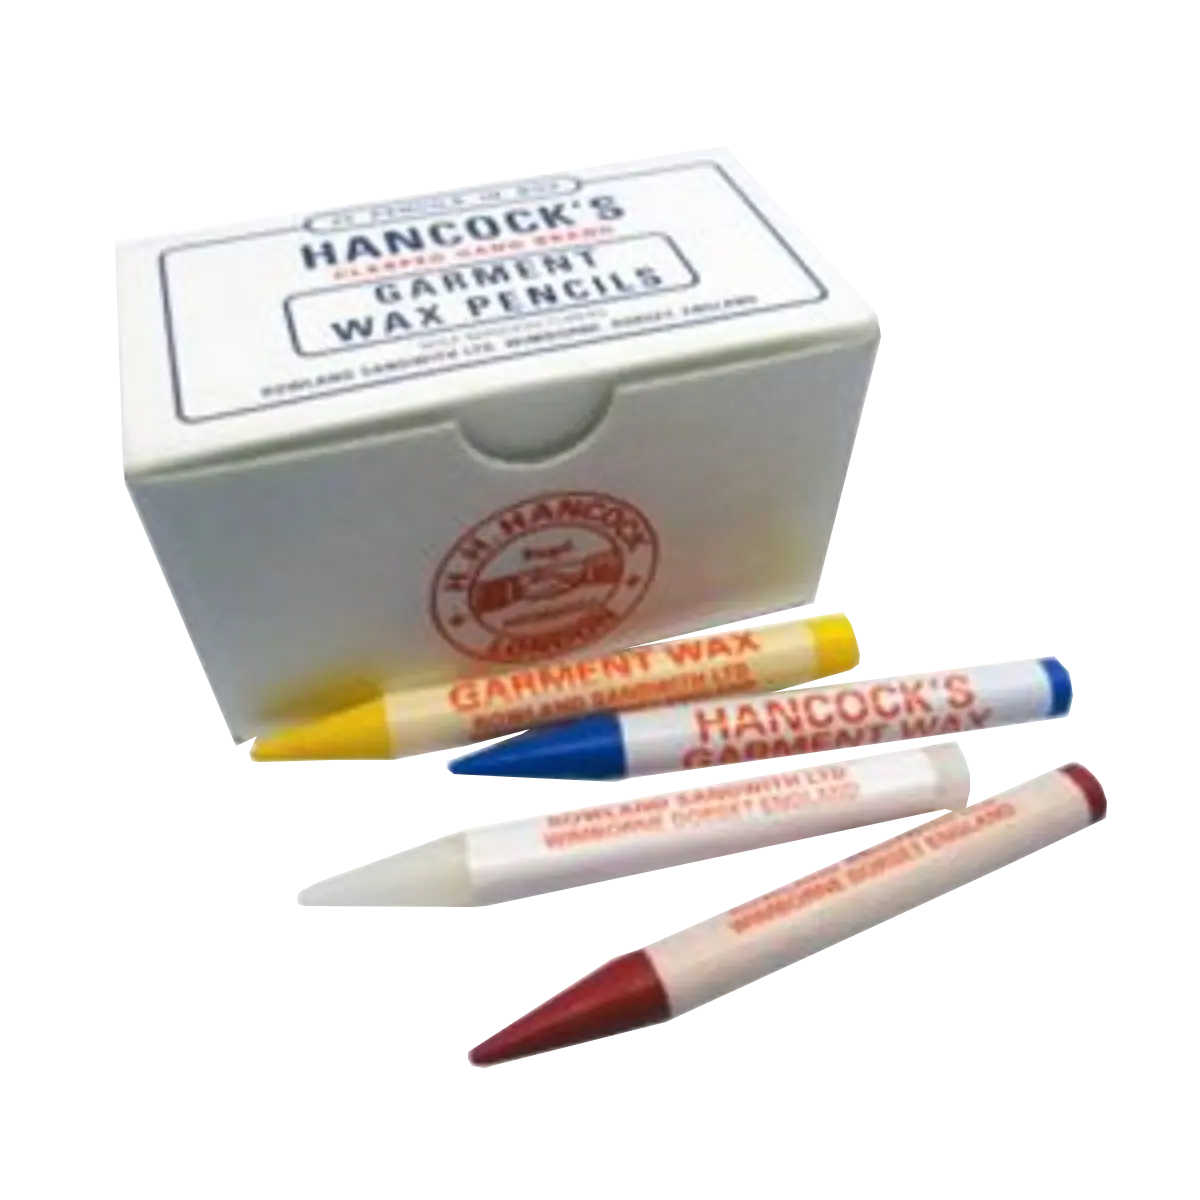 Hancock's Garment wax pencils, red,white, blue, yellow